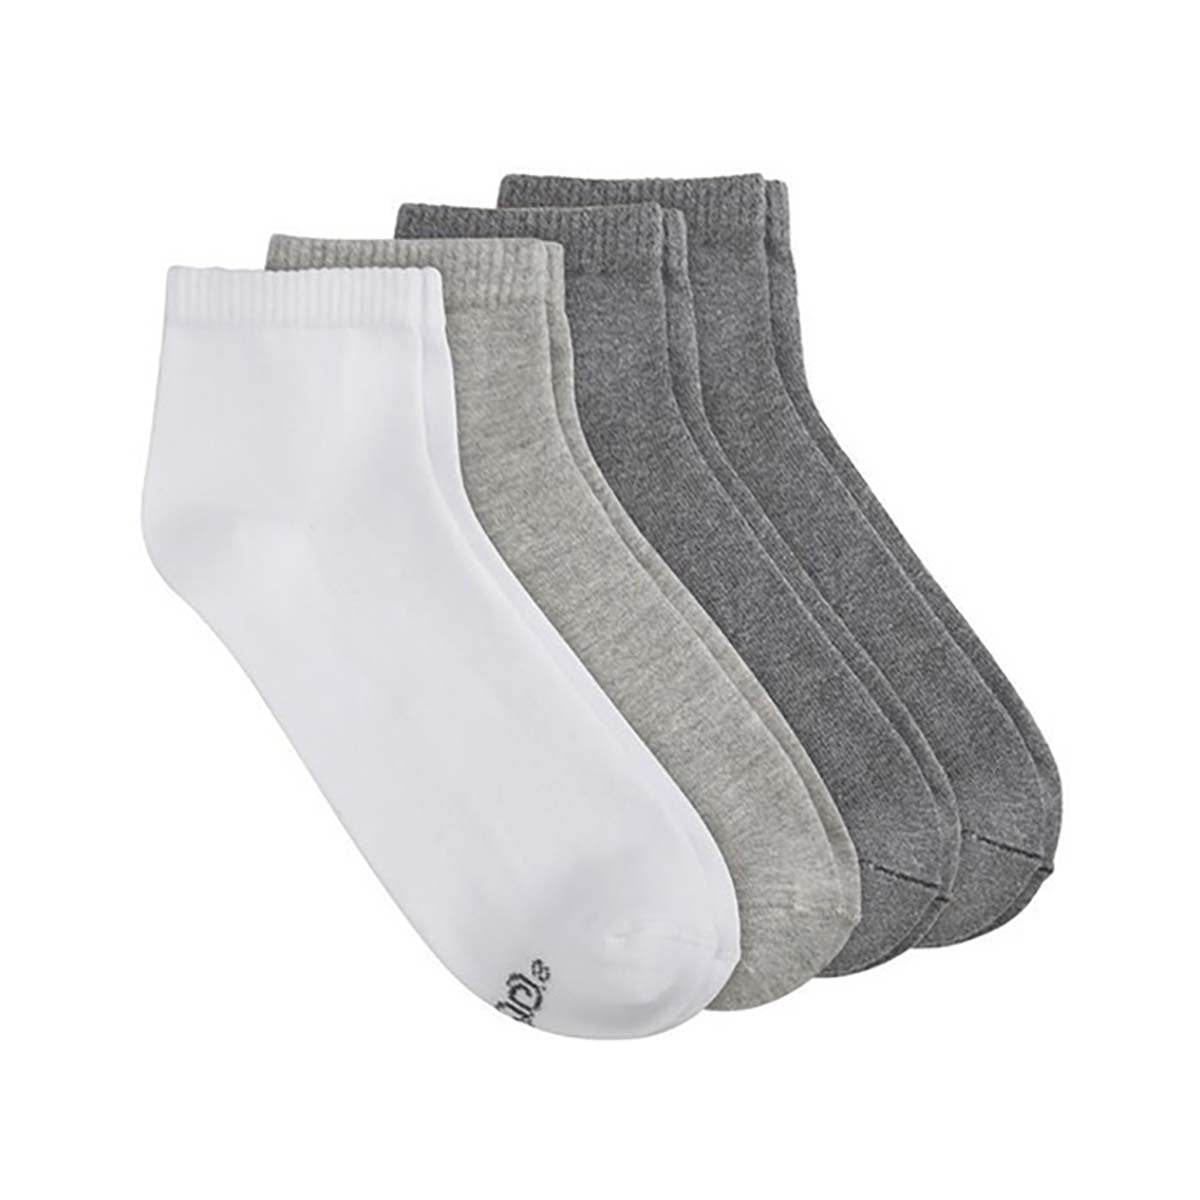 - of ▷ s.Oliver quarter grey socks – Sockstock® set & white 4